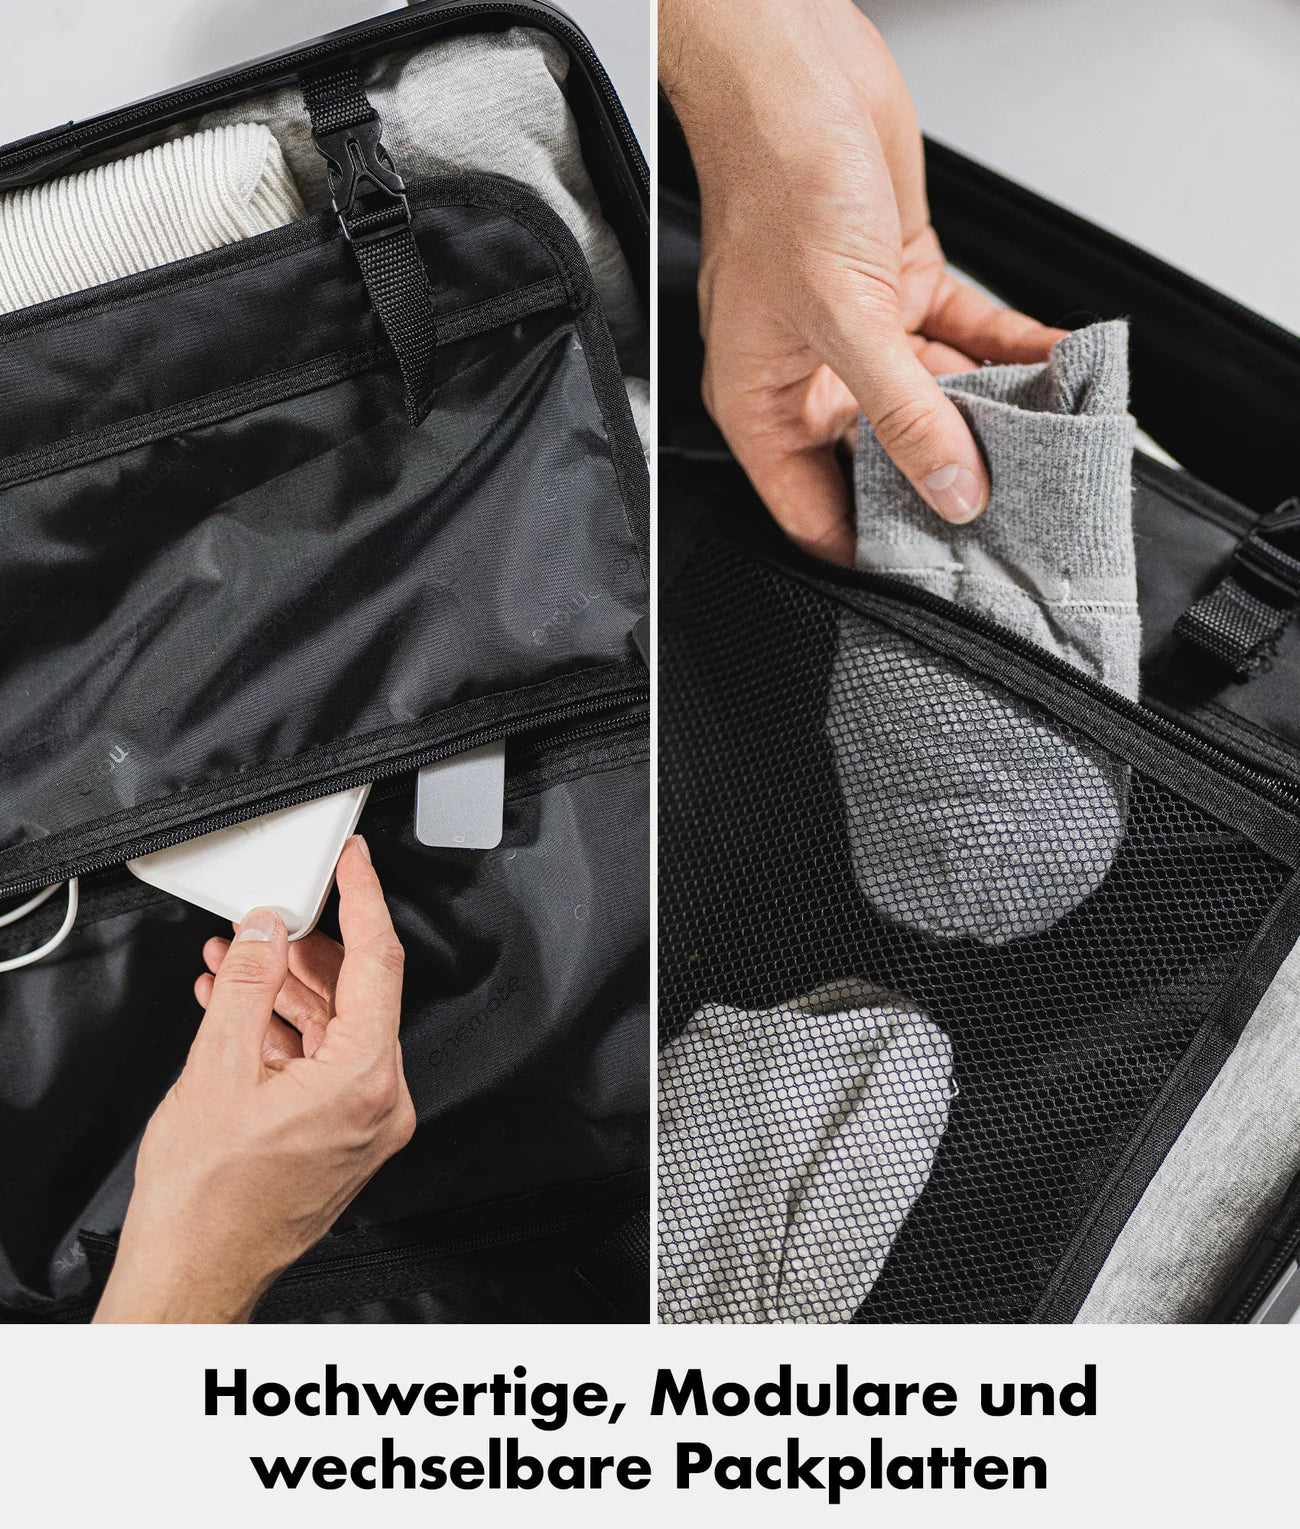 Handgepäck only – Koffer